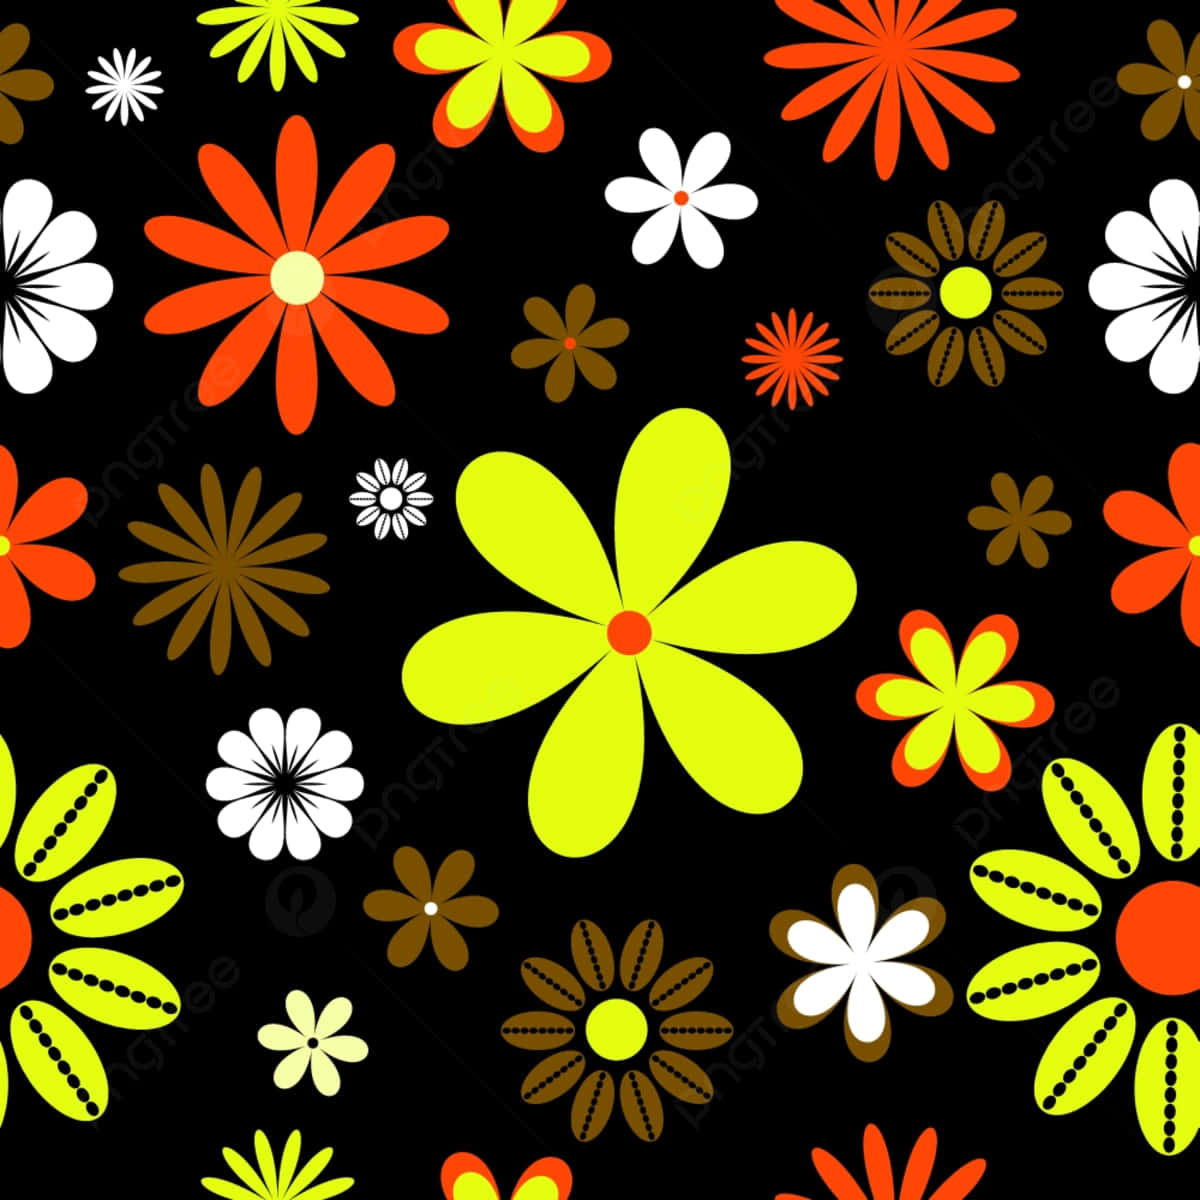 Caption: Classic Retro Floral Arrangement Design Wallpaper